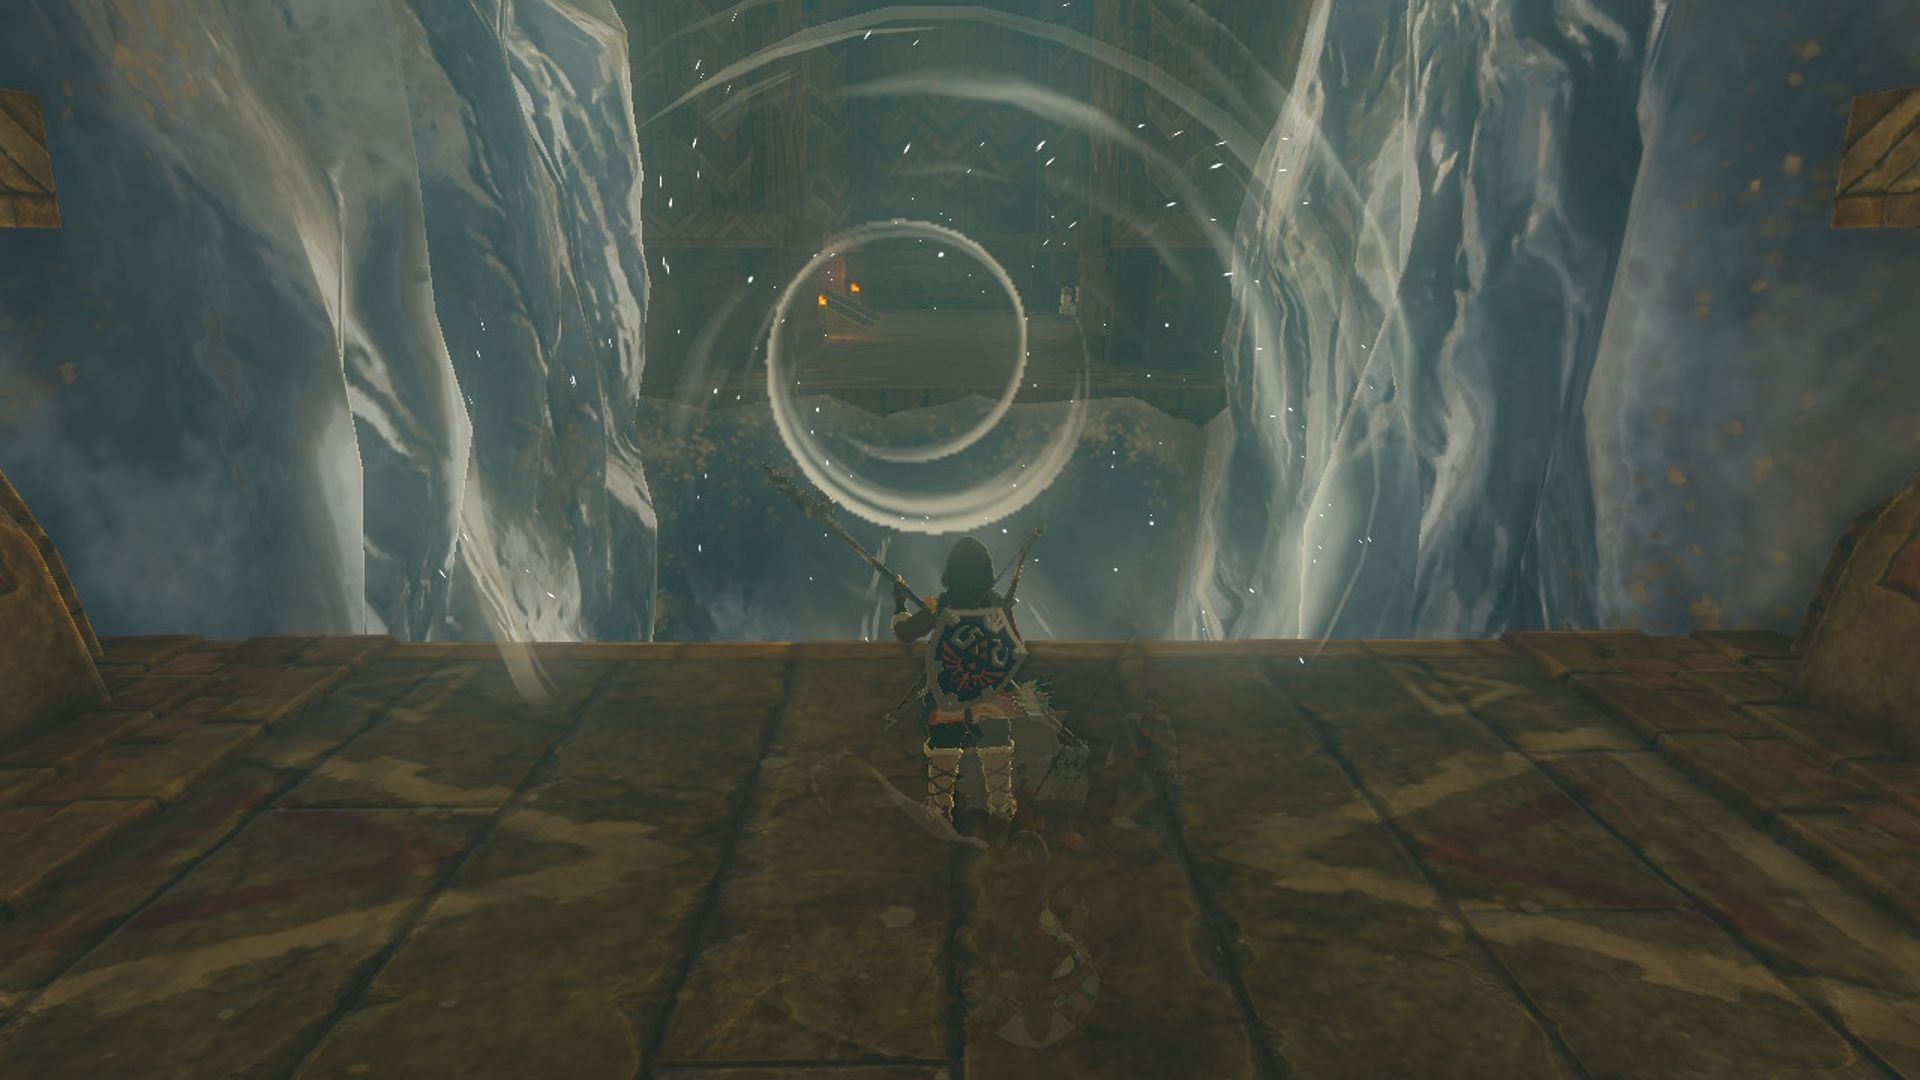 The Legend Of Zelda Tautan Air Mata Kerajaan Meluncur Melintasi Lorong Menggunakan Hembusan Untuk Mencapai Turbin Kuil Angin Keempat